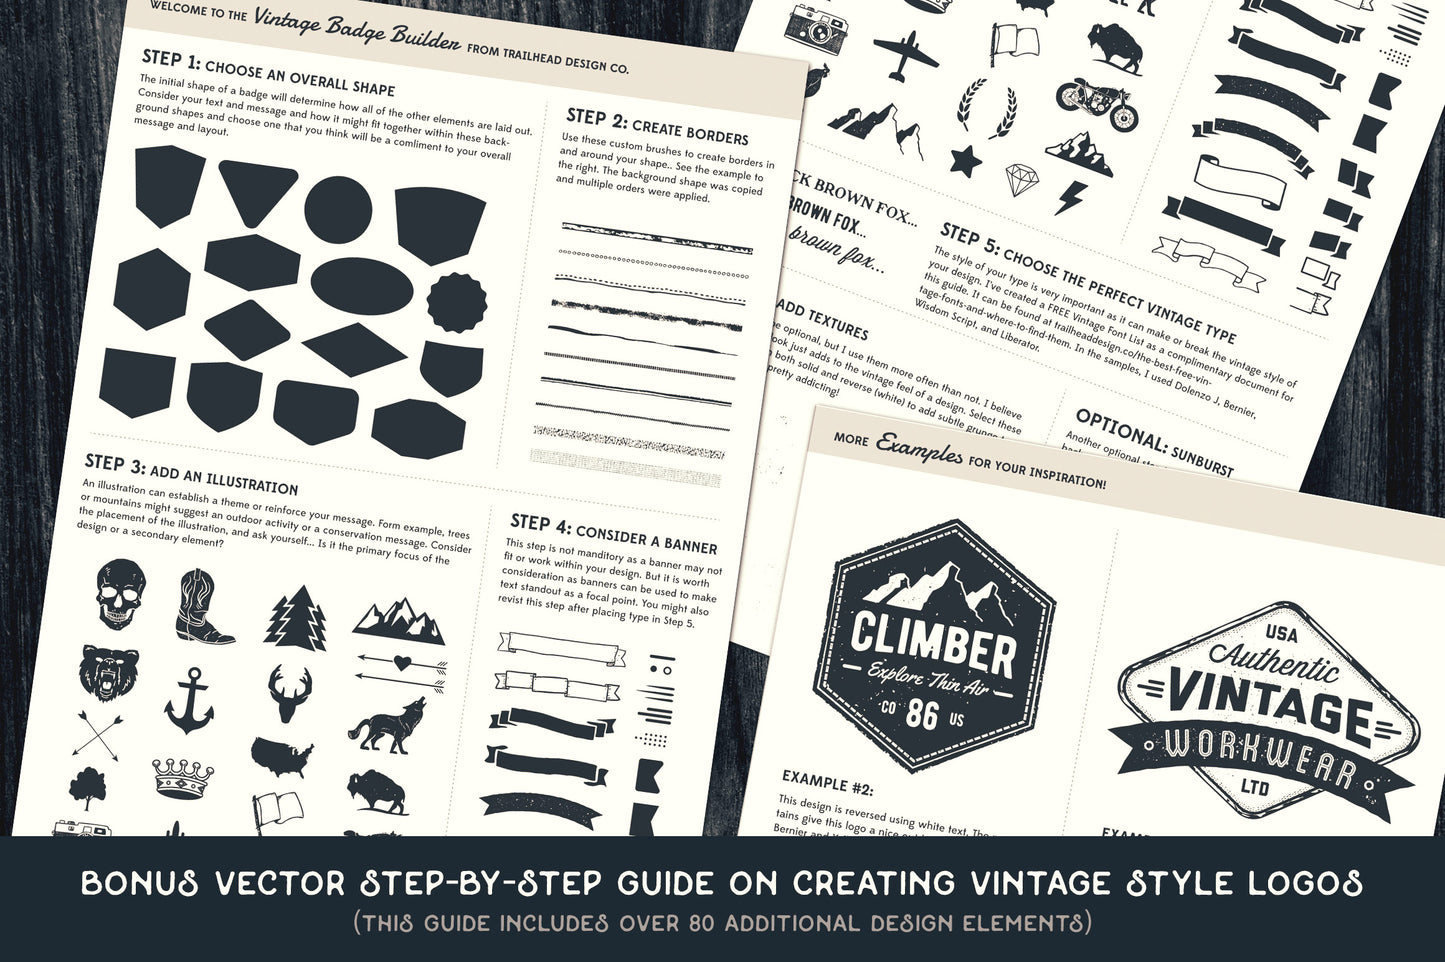 Easy Vintage Logo Creation Kit